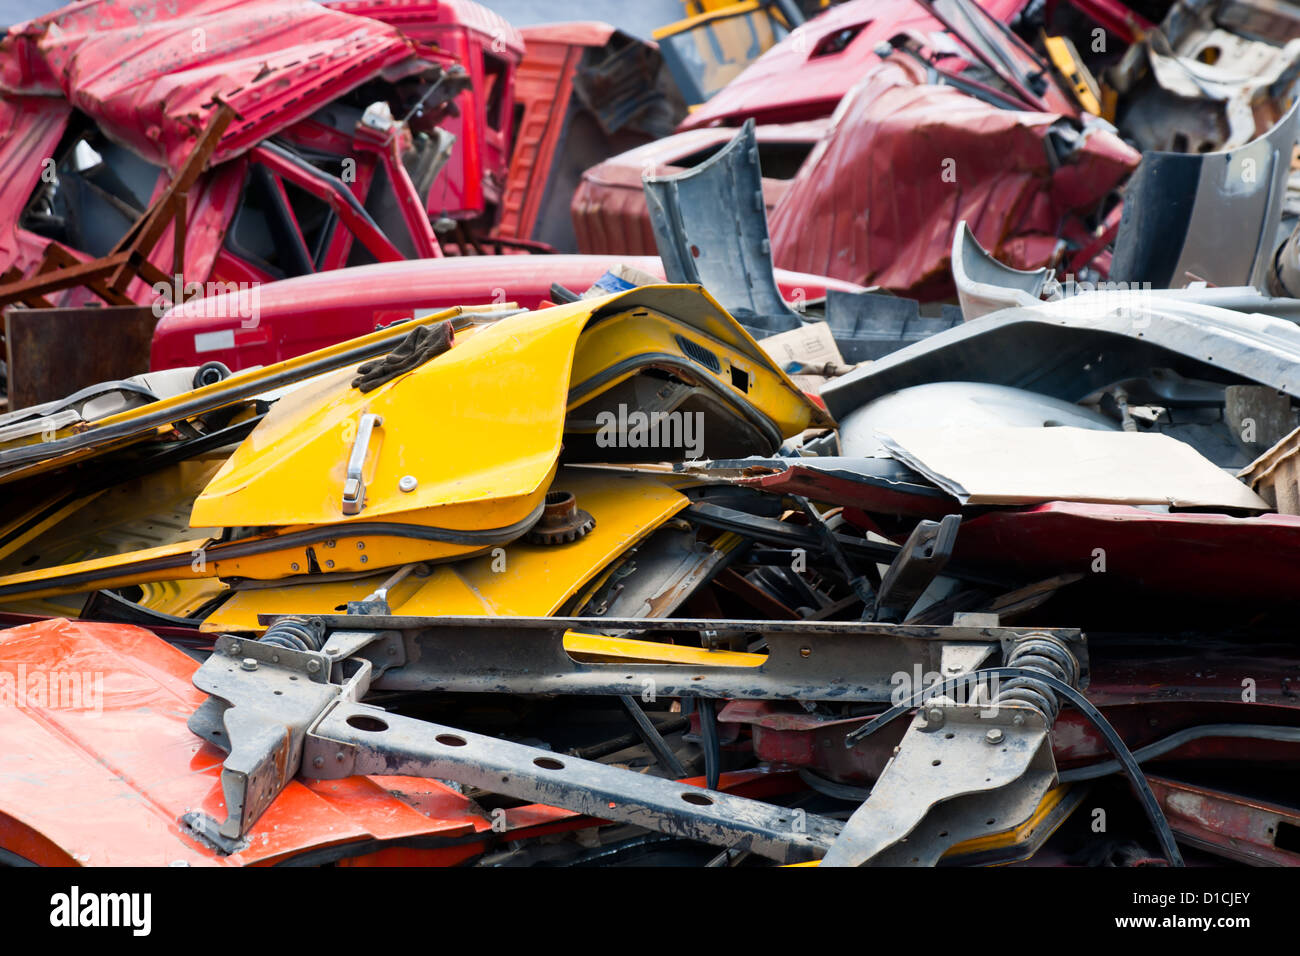 Stacks of crushed cars at junkyard Stock Photo